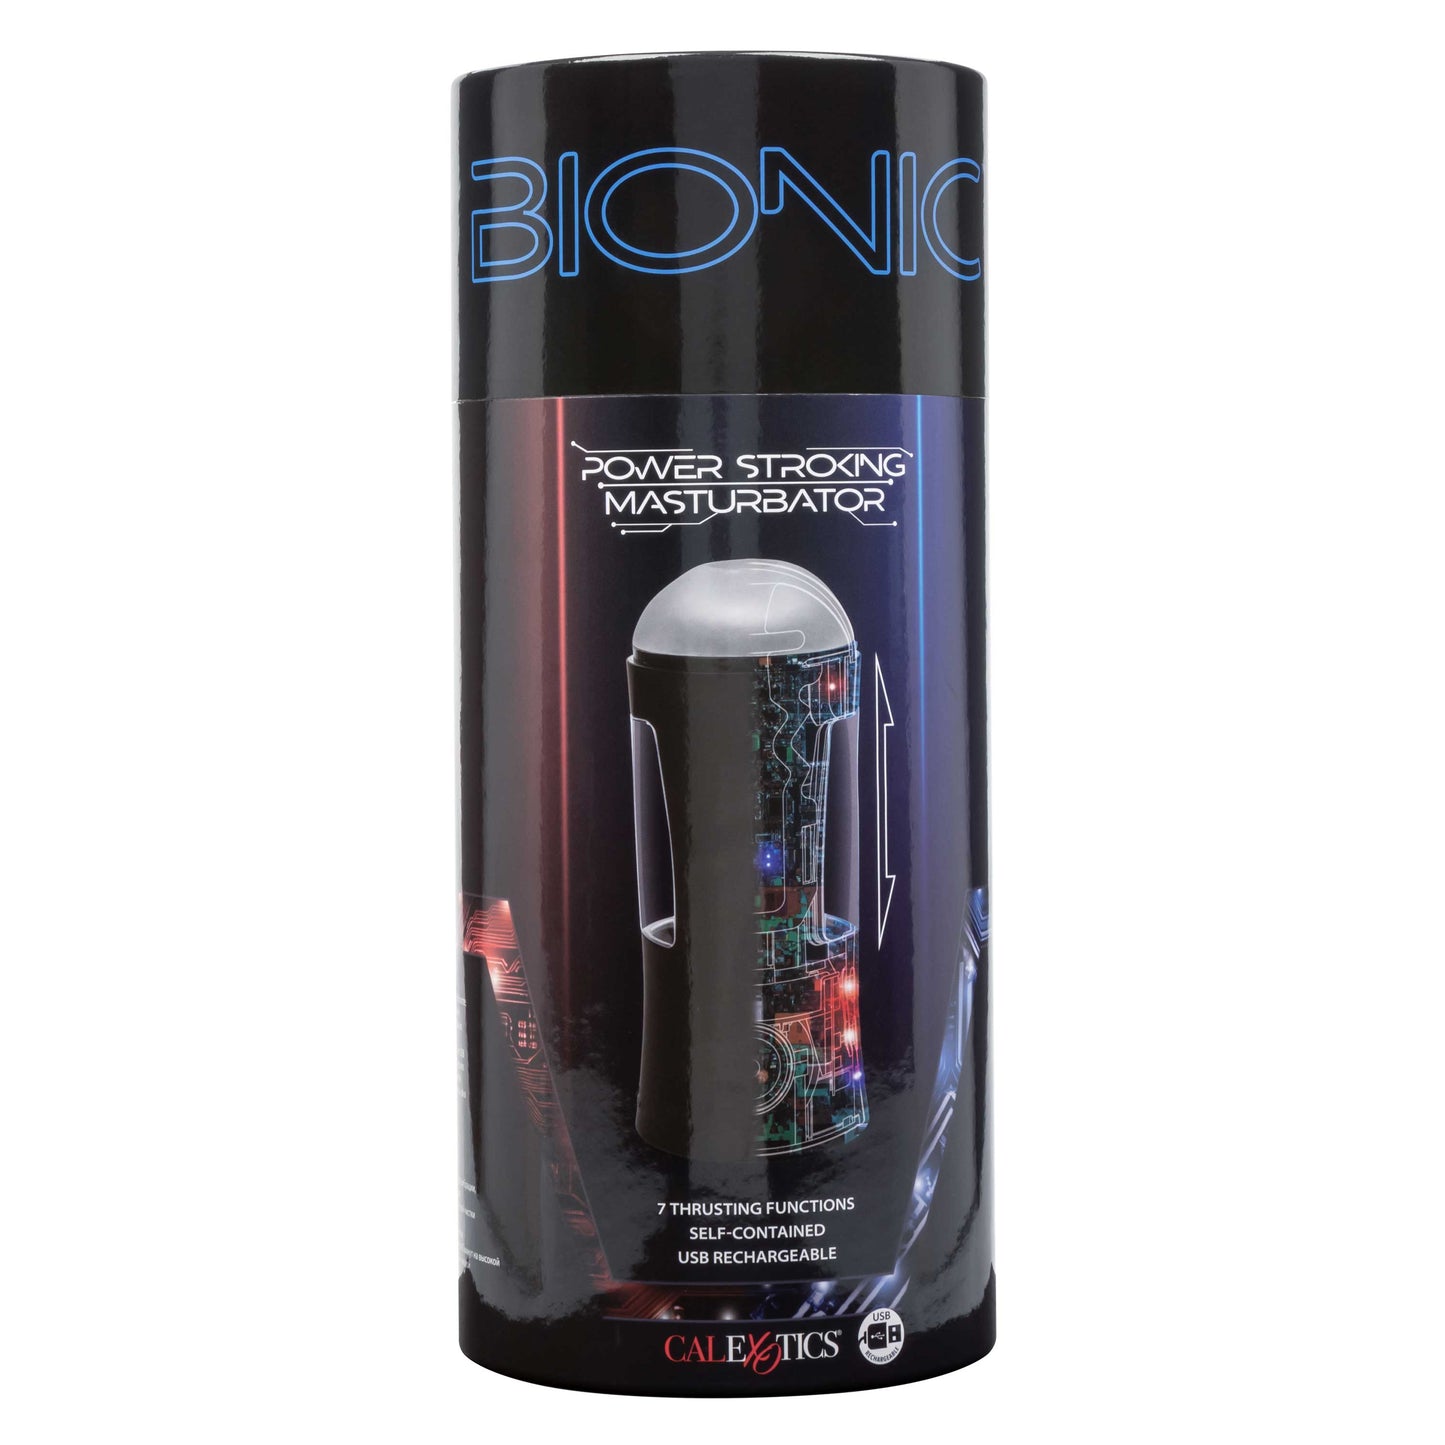 Bionic Power Stroking Masturbator - Black SE0851053